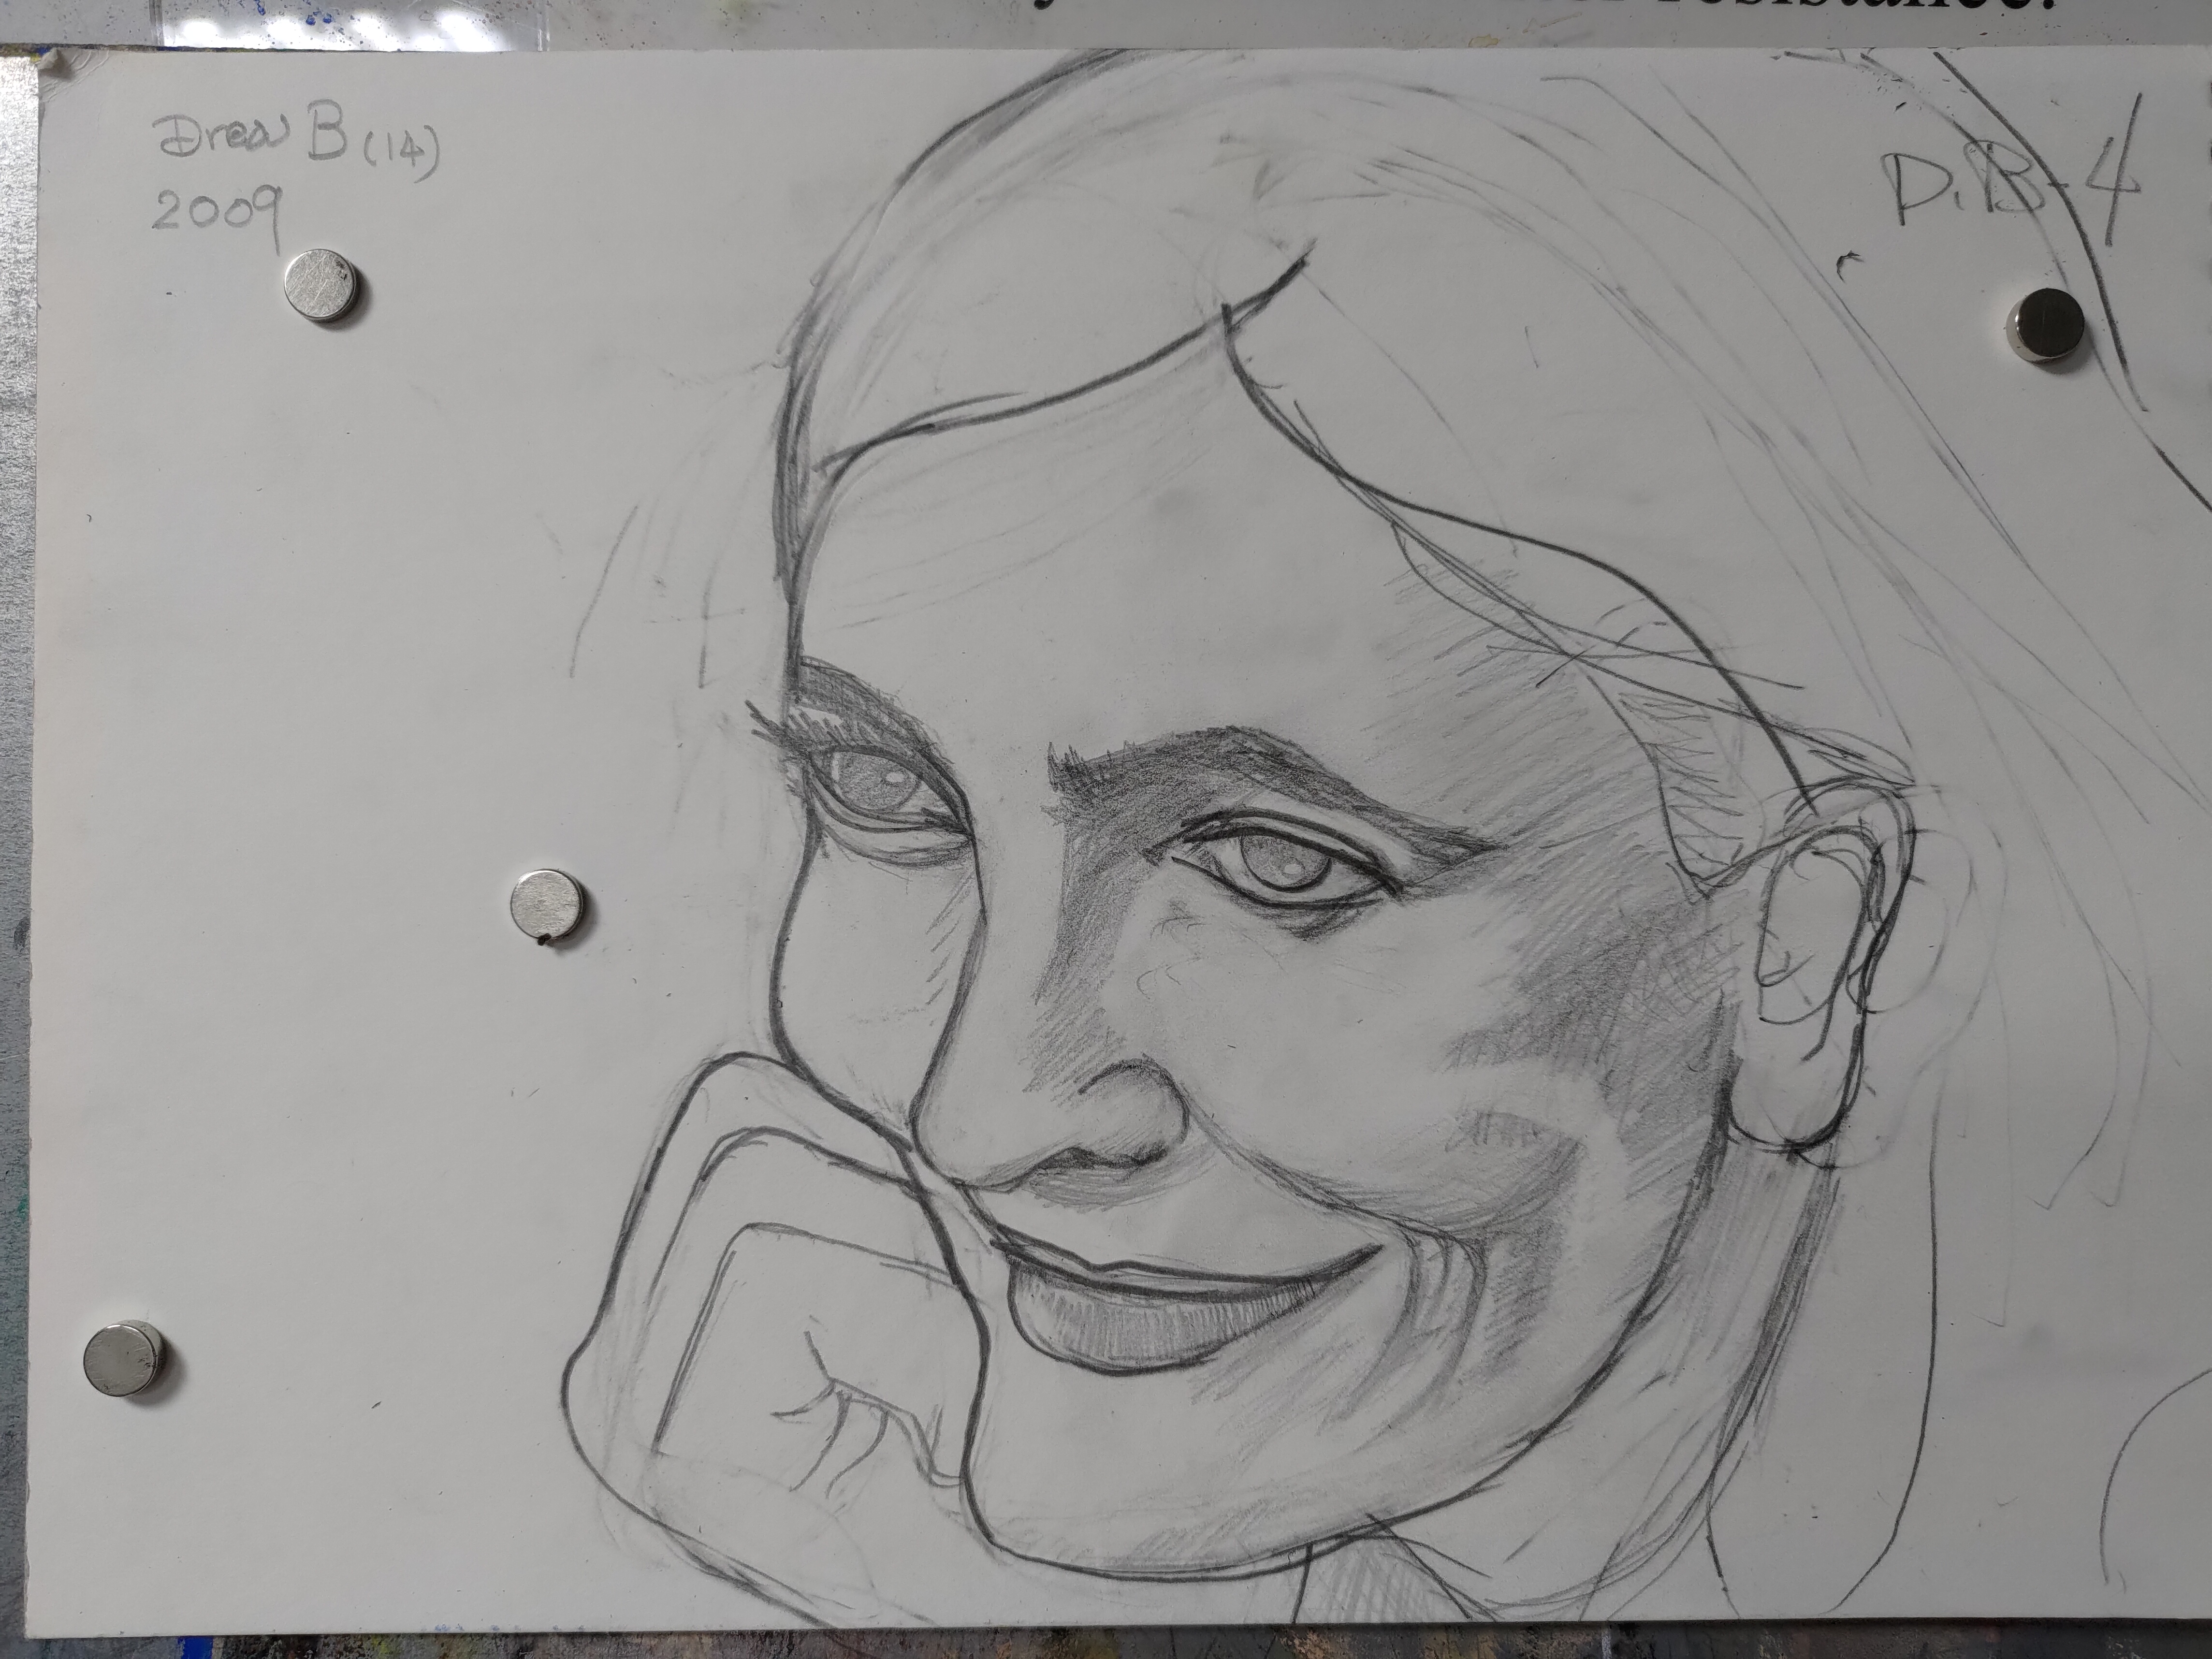 sketch of Drew Barrymore